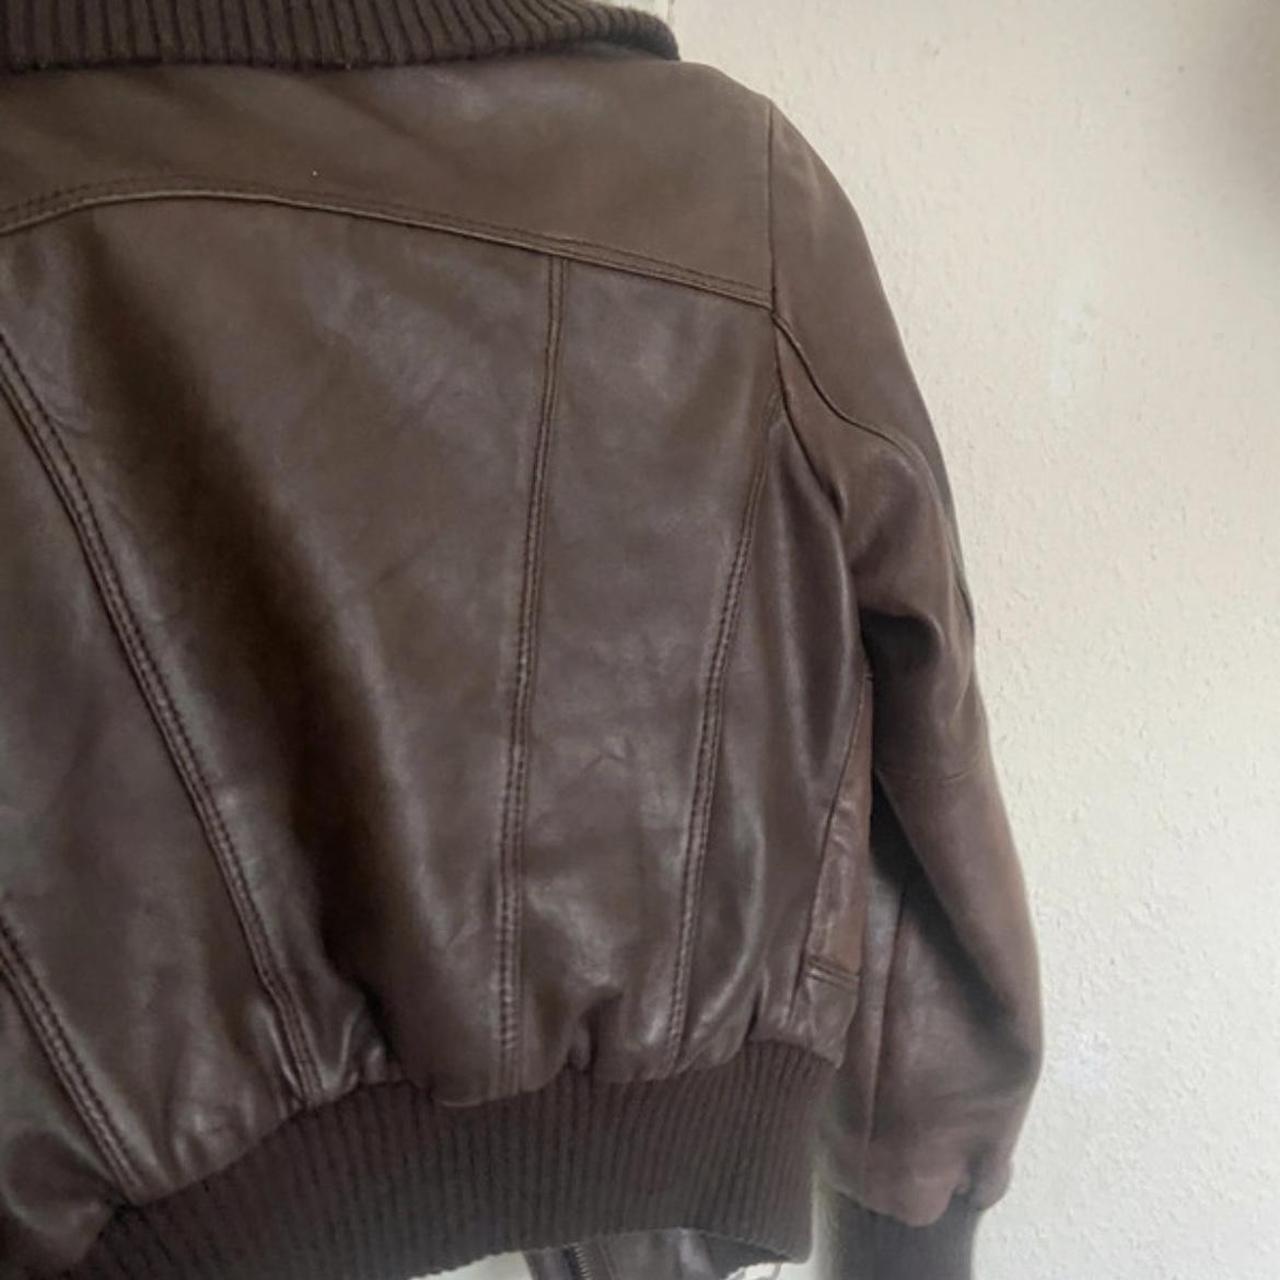 The lengesttt vintage leather bomber jacket. So so... - Depop